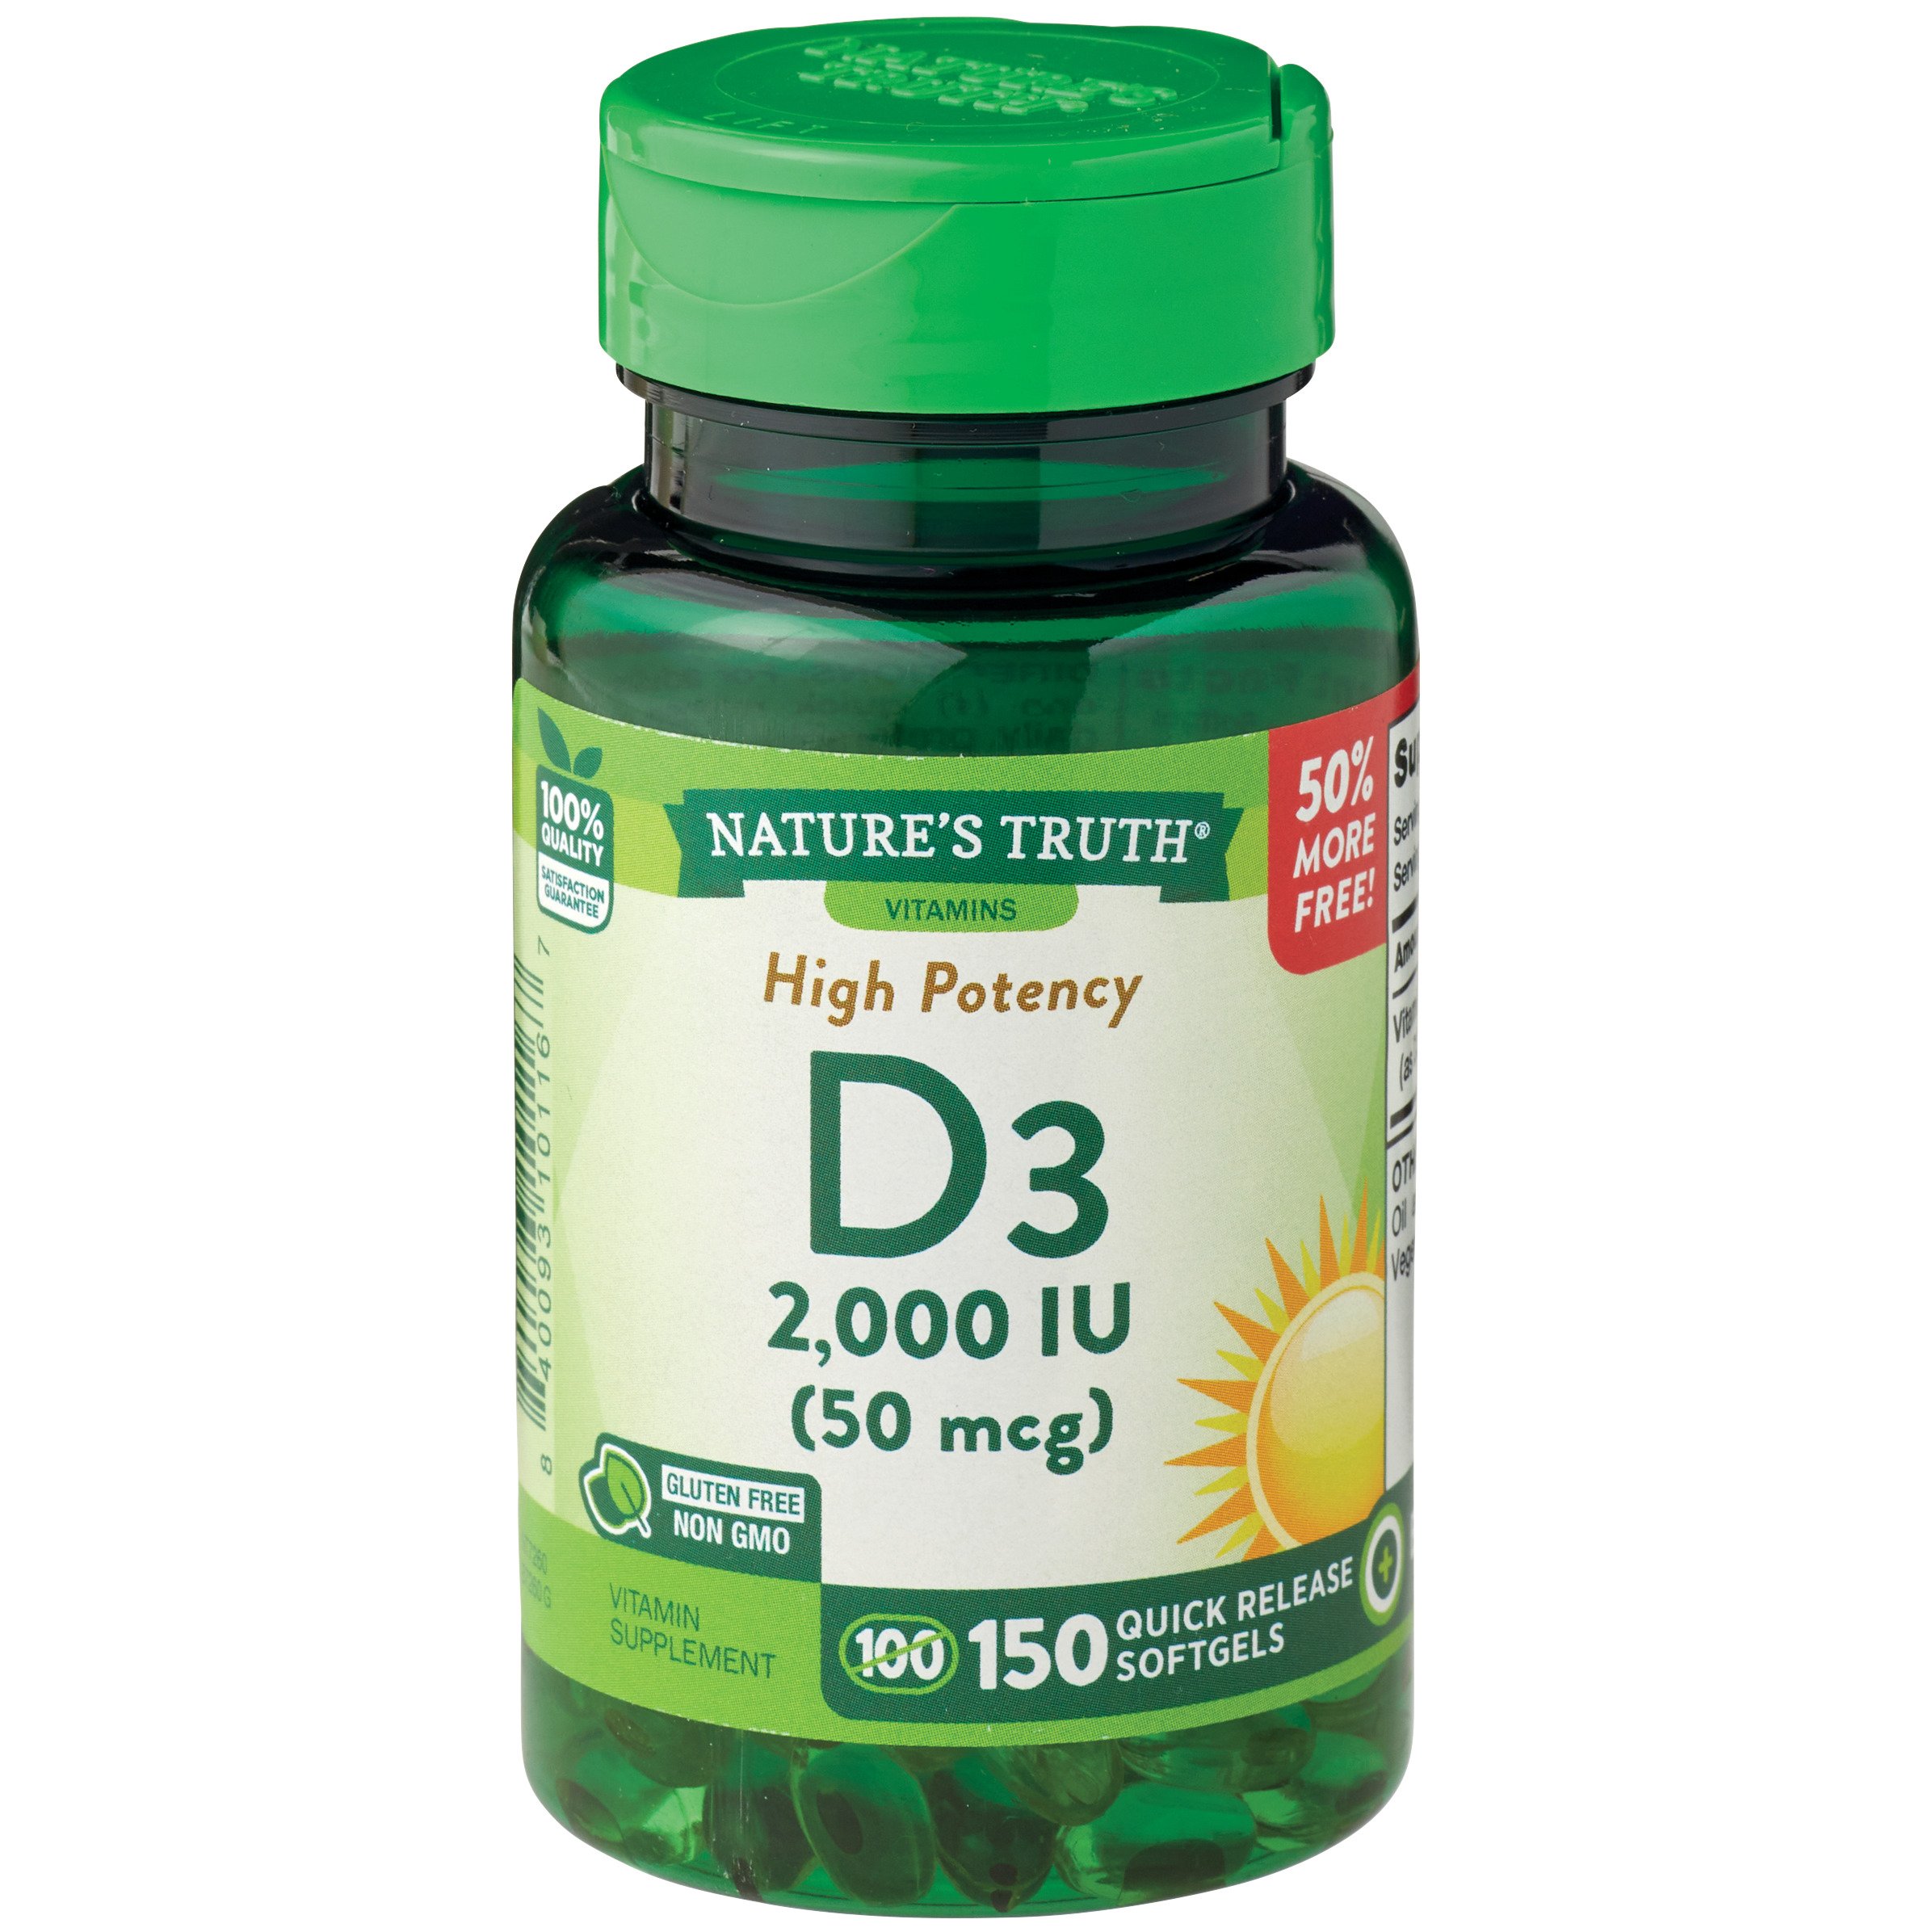 Nature's Truth High Potency Vitamin D3 2000 IU - Shop Vitamins A-Z at H-E-B